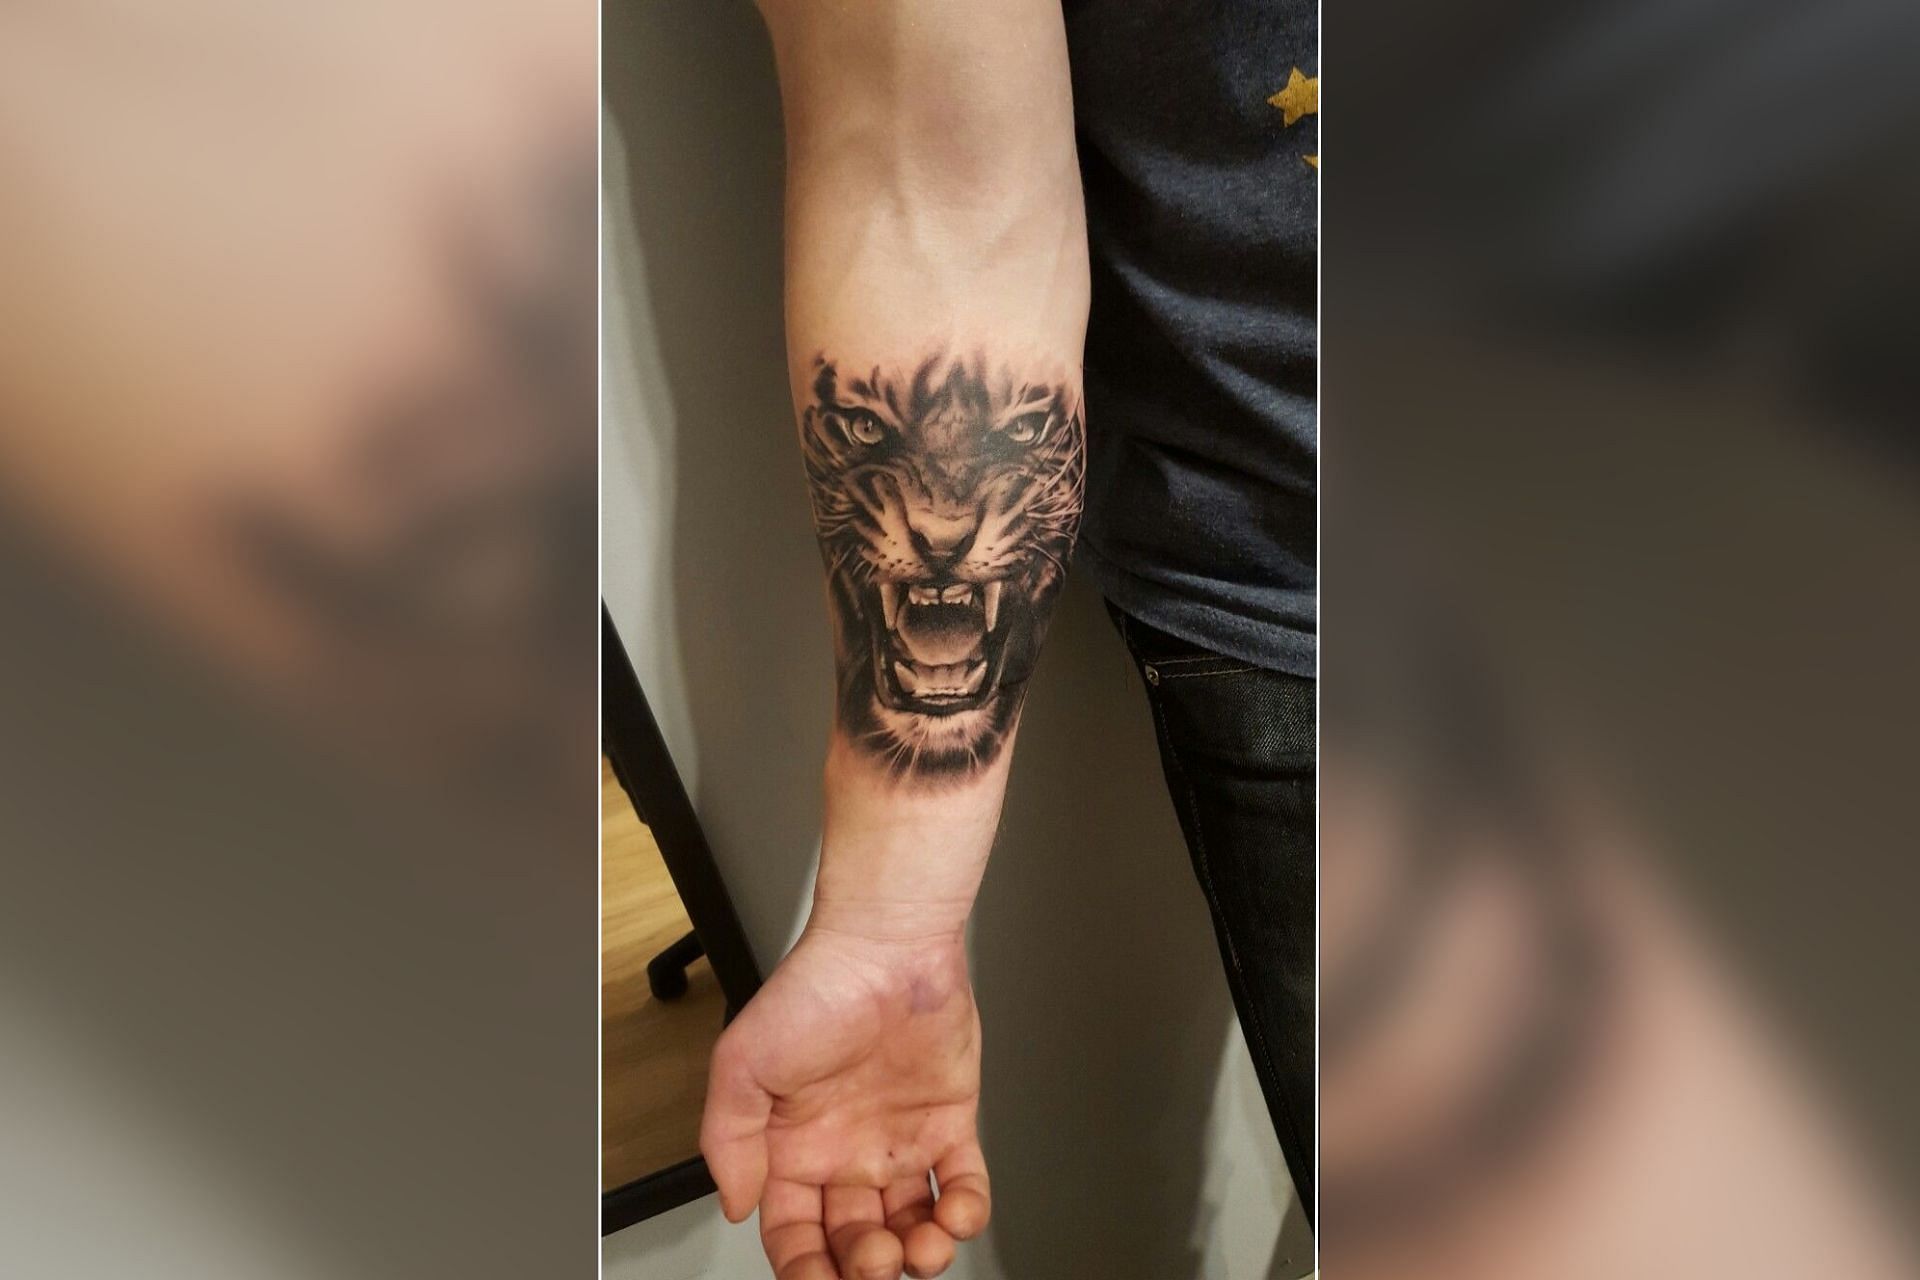 Growling Tiger Forearm Tattoo - Best Tattoo Ideas Gallery